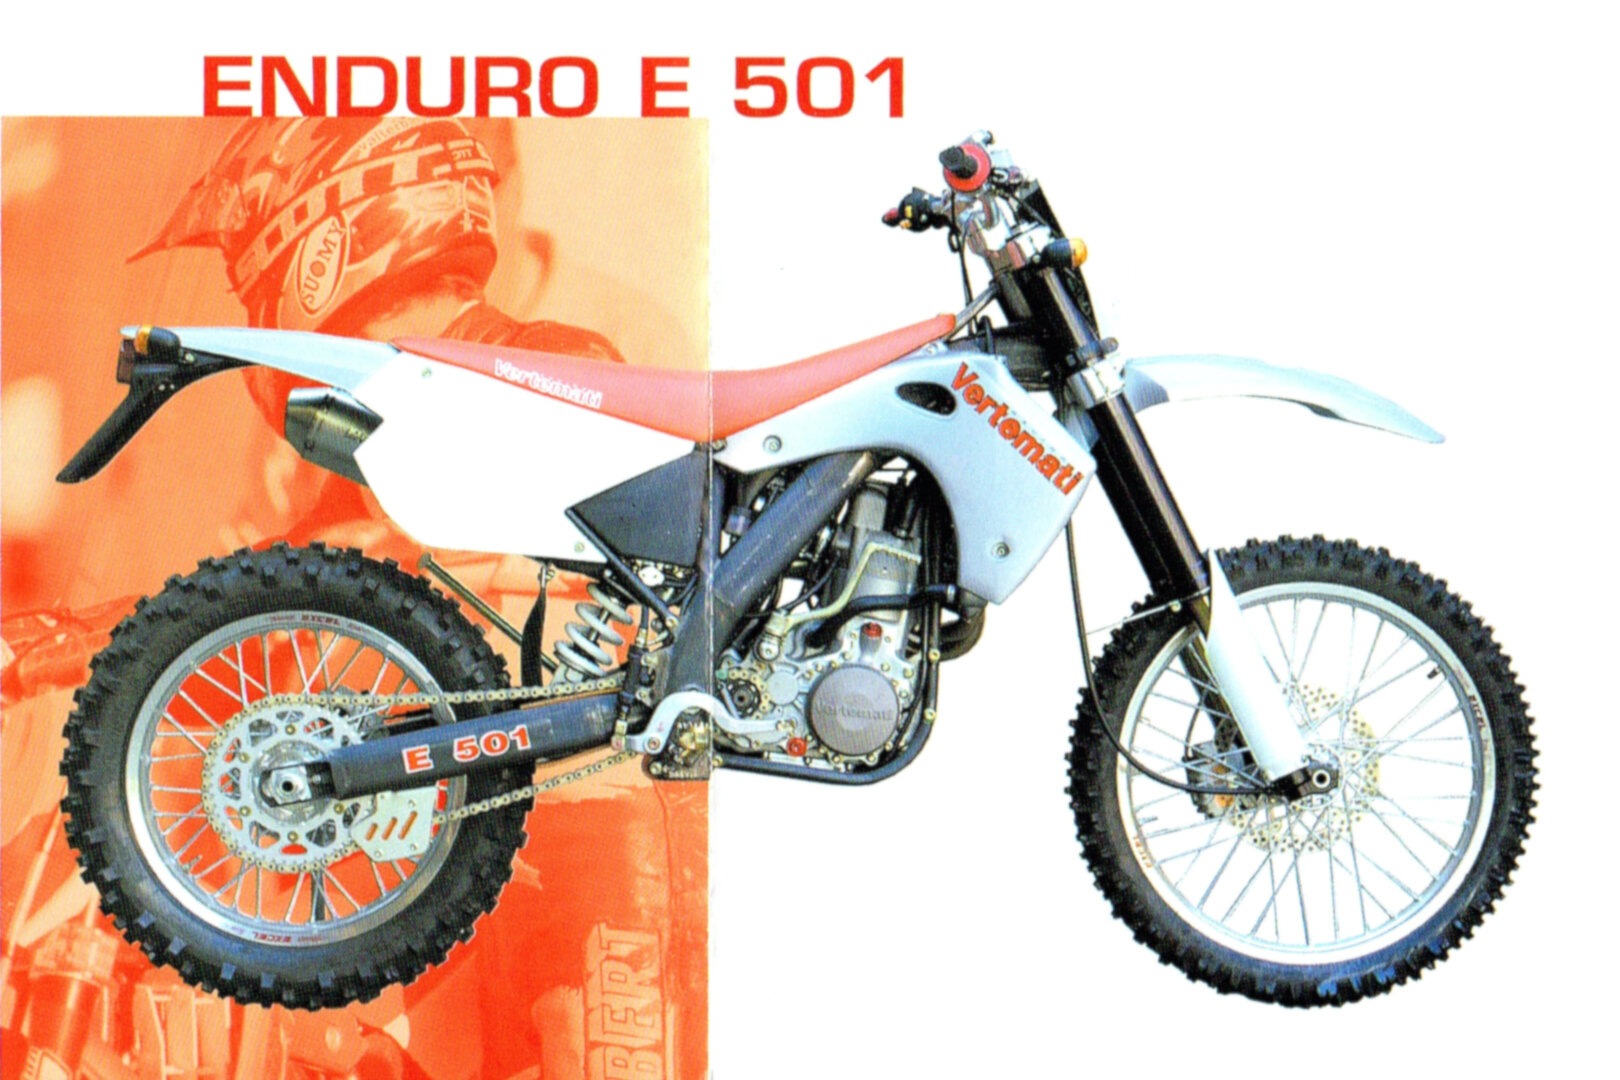 Moto del día: Vertemati Enduro E501